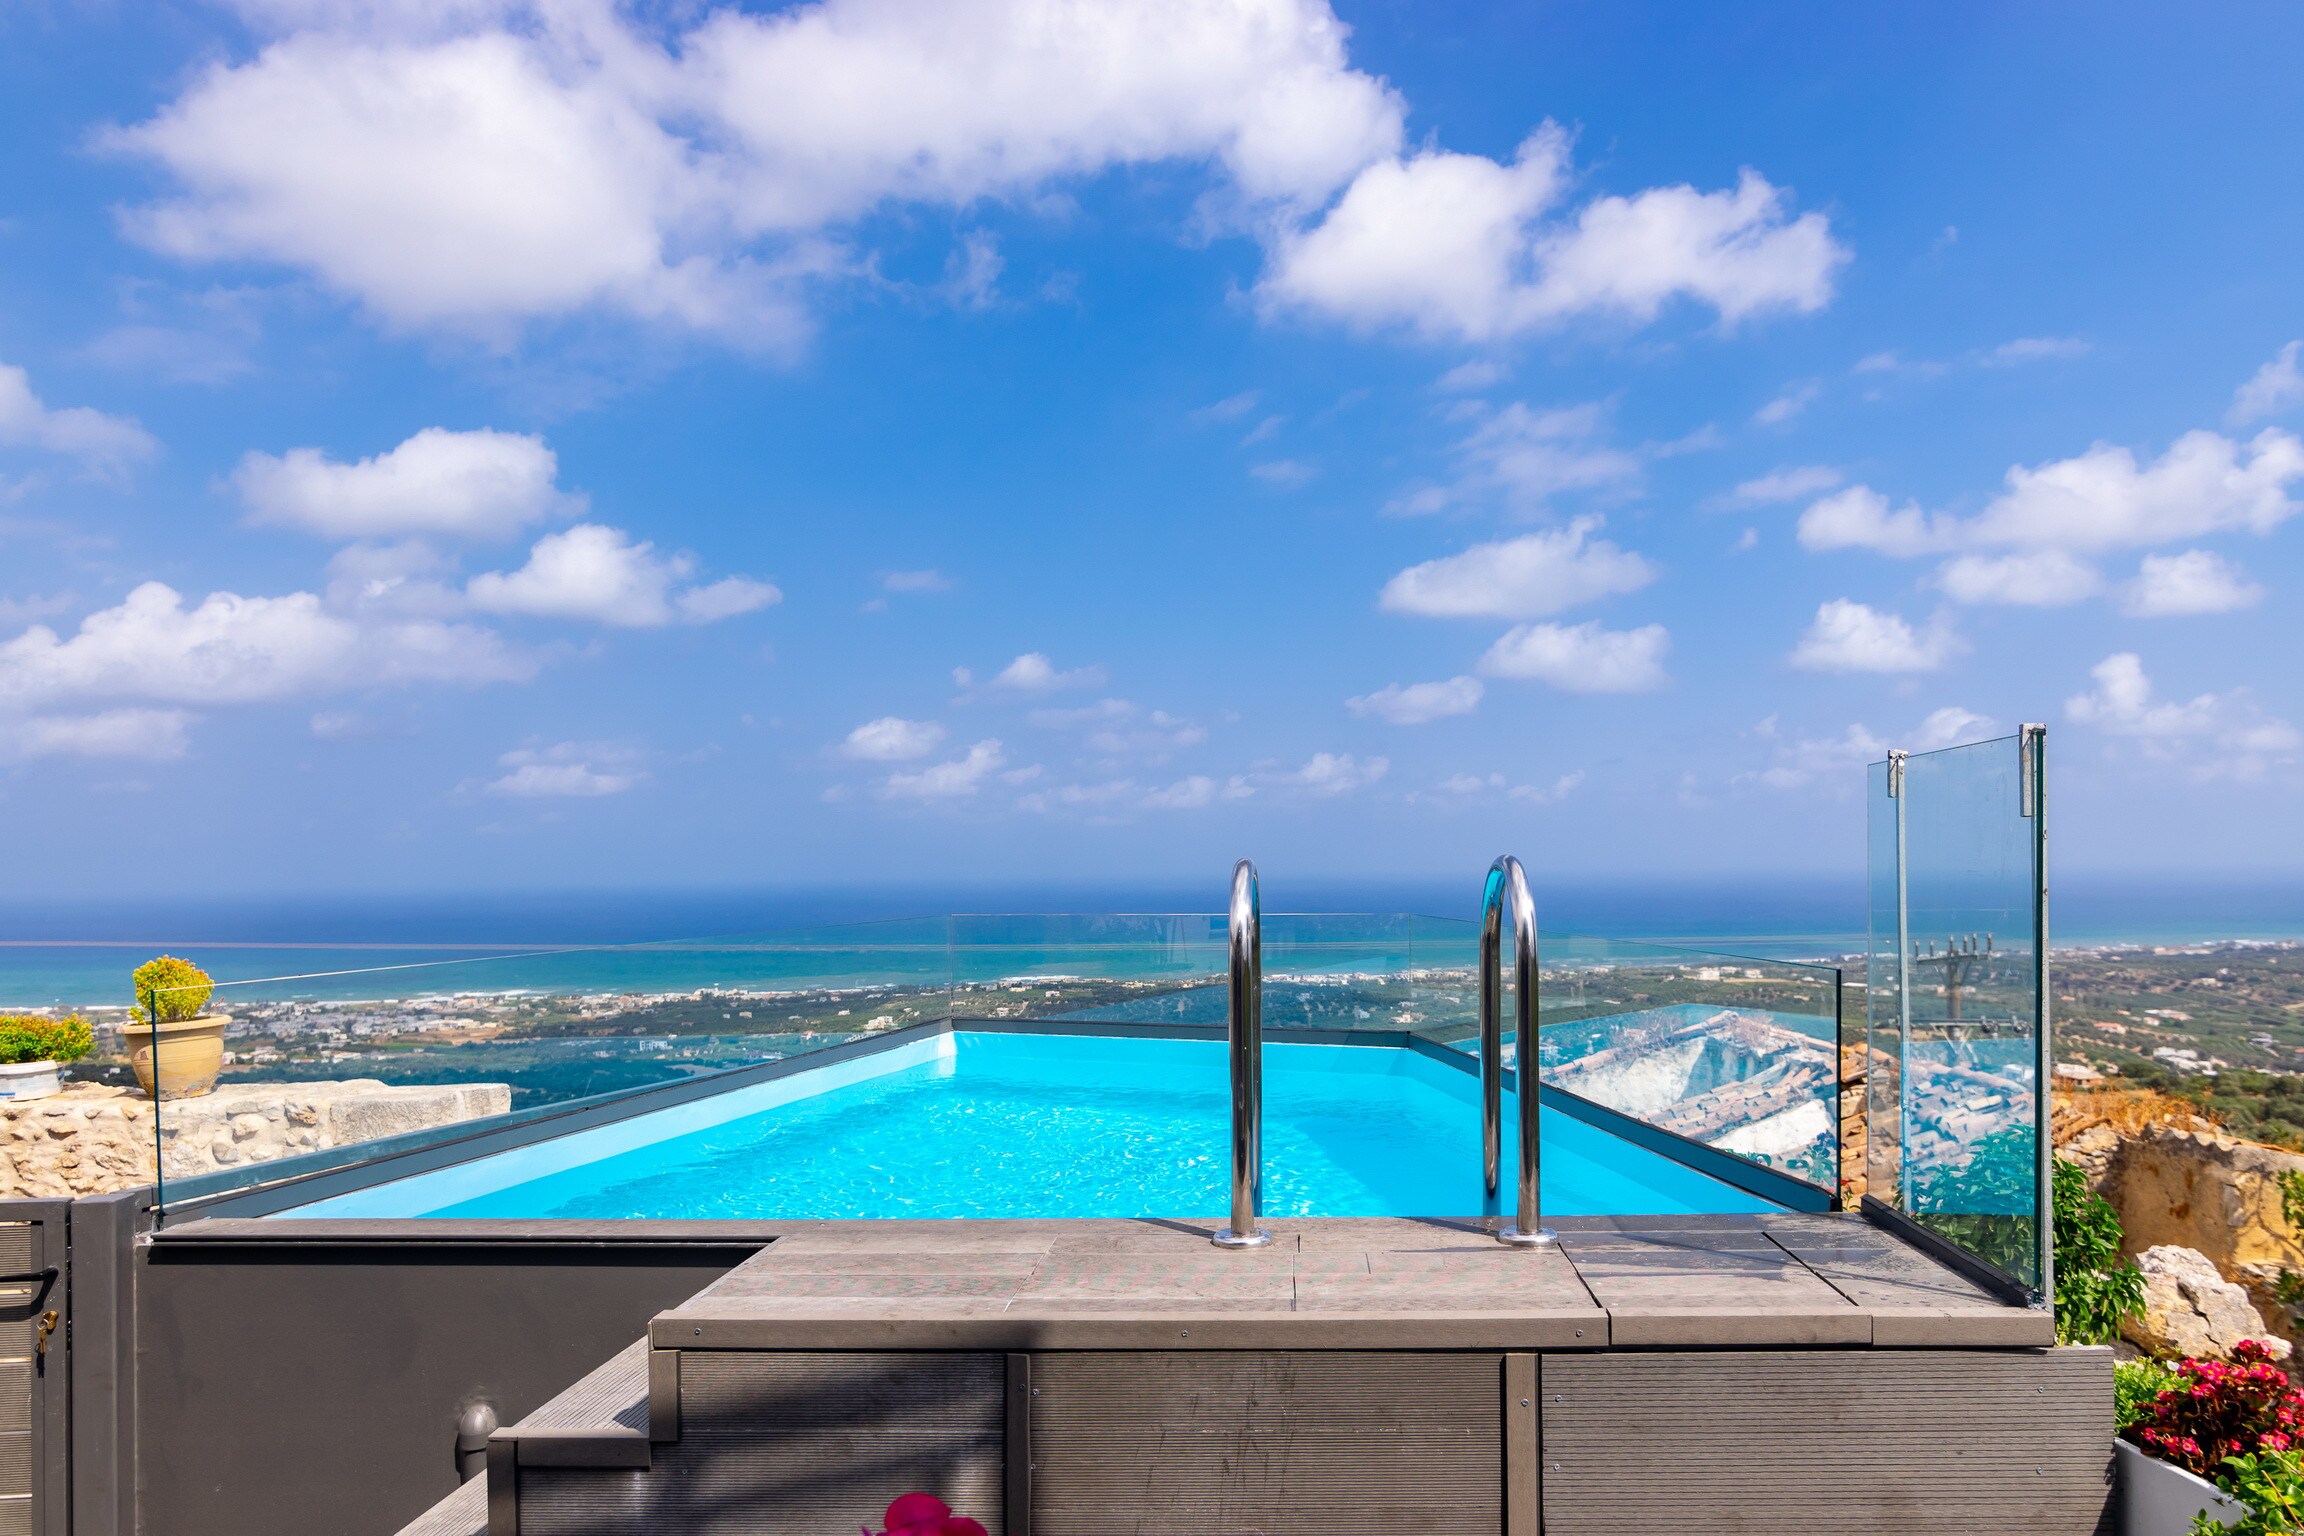 Swimming pool of Incredible view,Stone build,Infinity pool,Maroulas,Rethymno,Crete